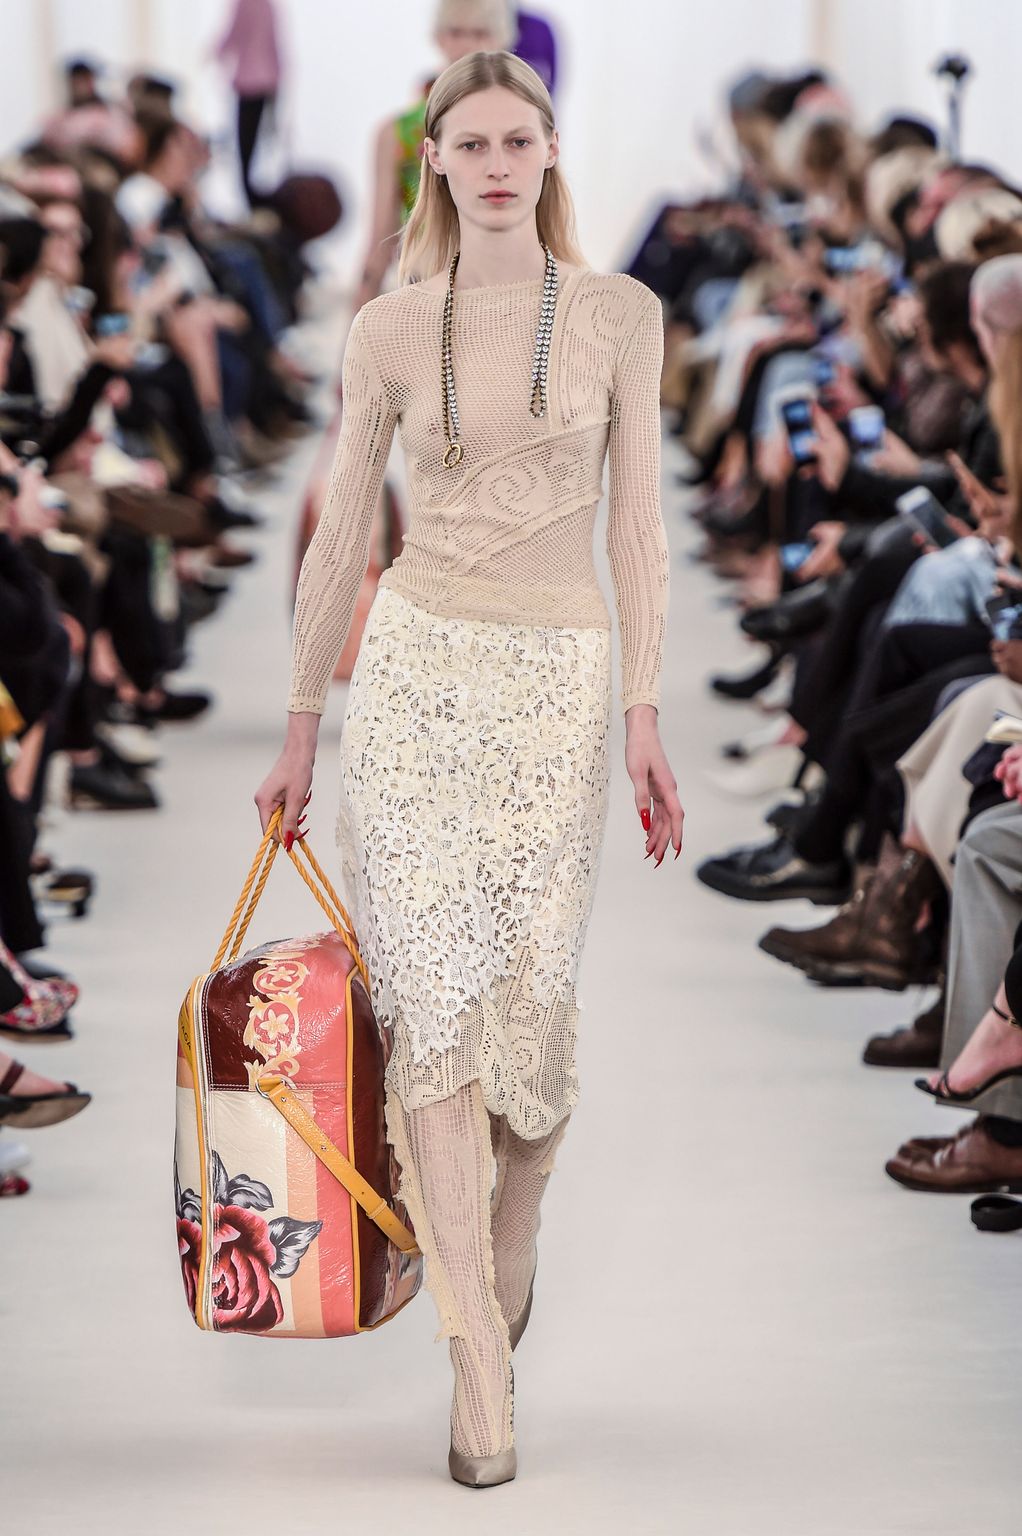 The redemption of Balenciaga at Paris Fashion Week